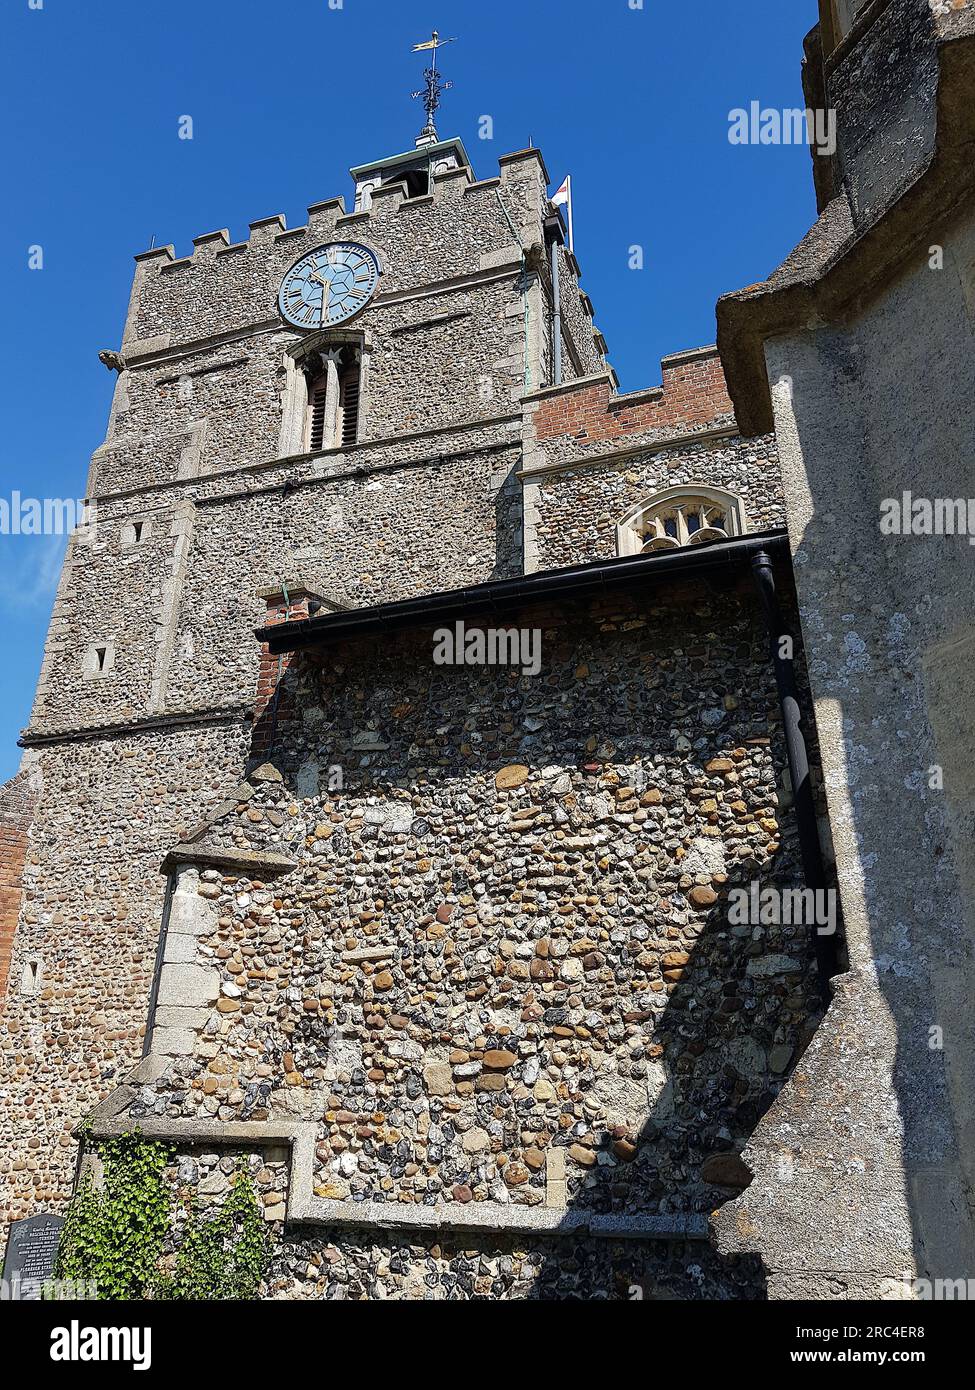 The church tower in Finchingfield, Essex, UK. Stock Photo